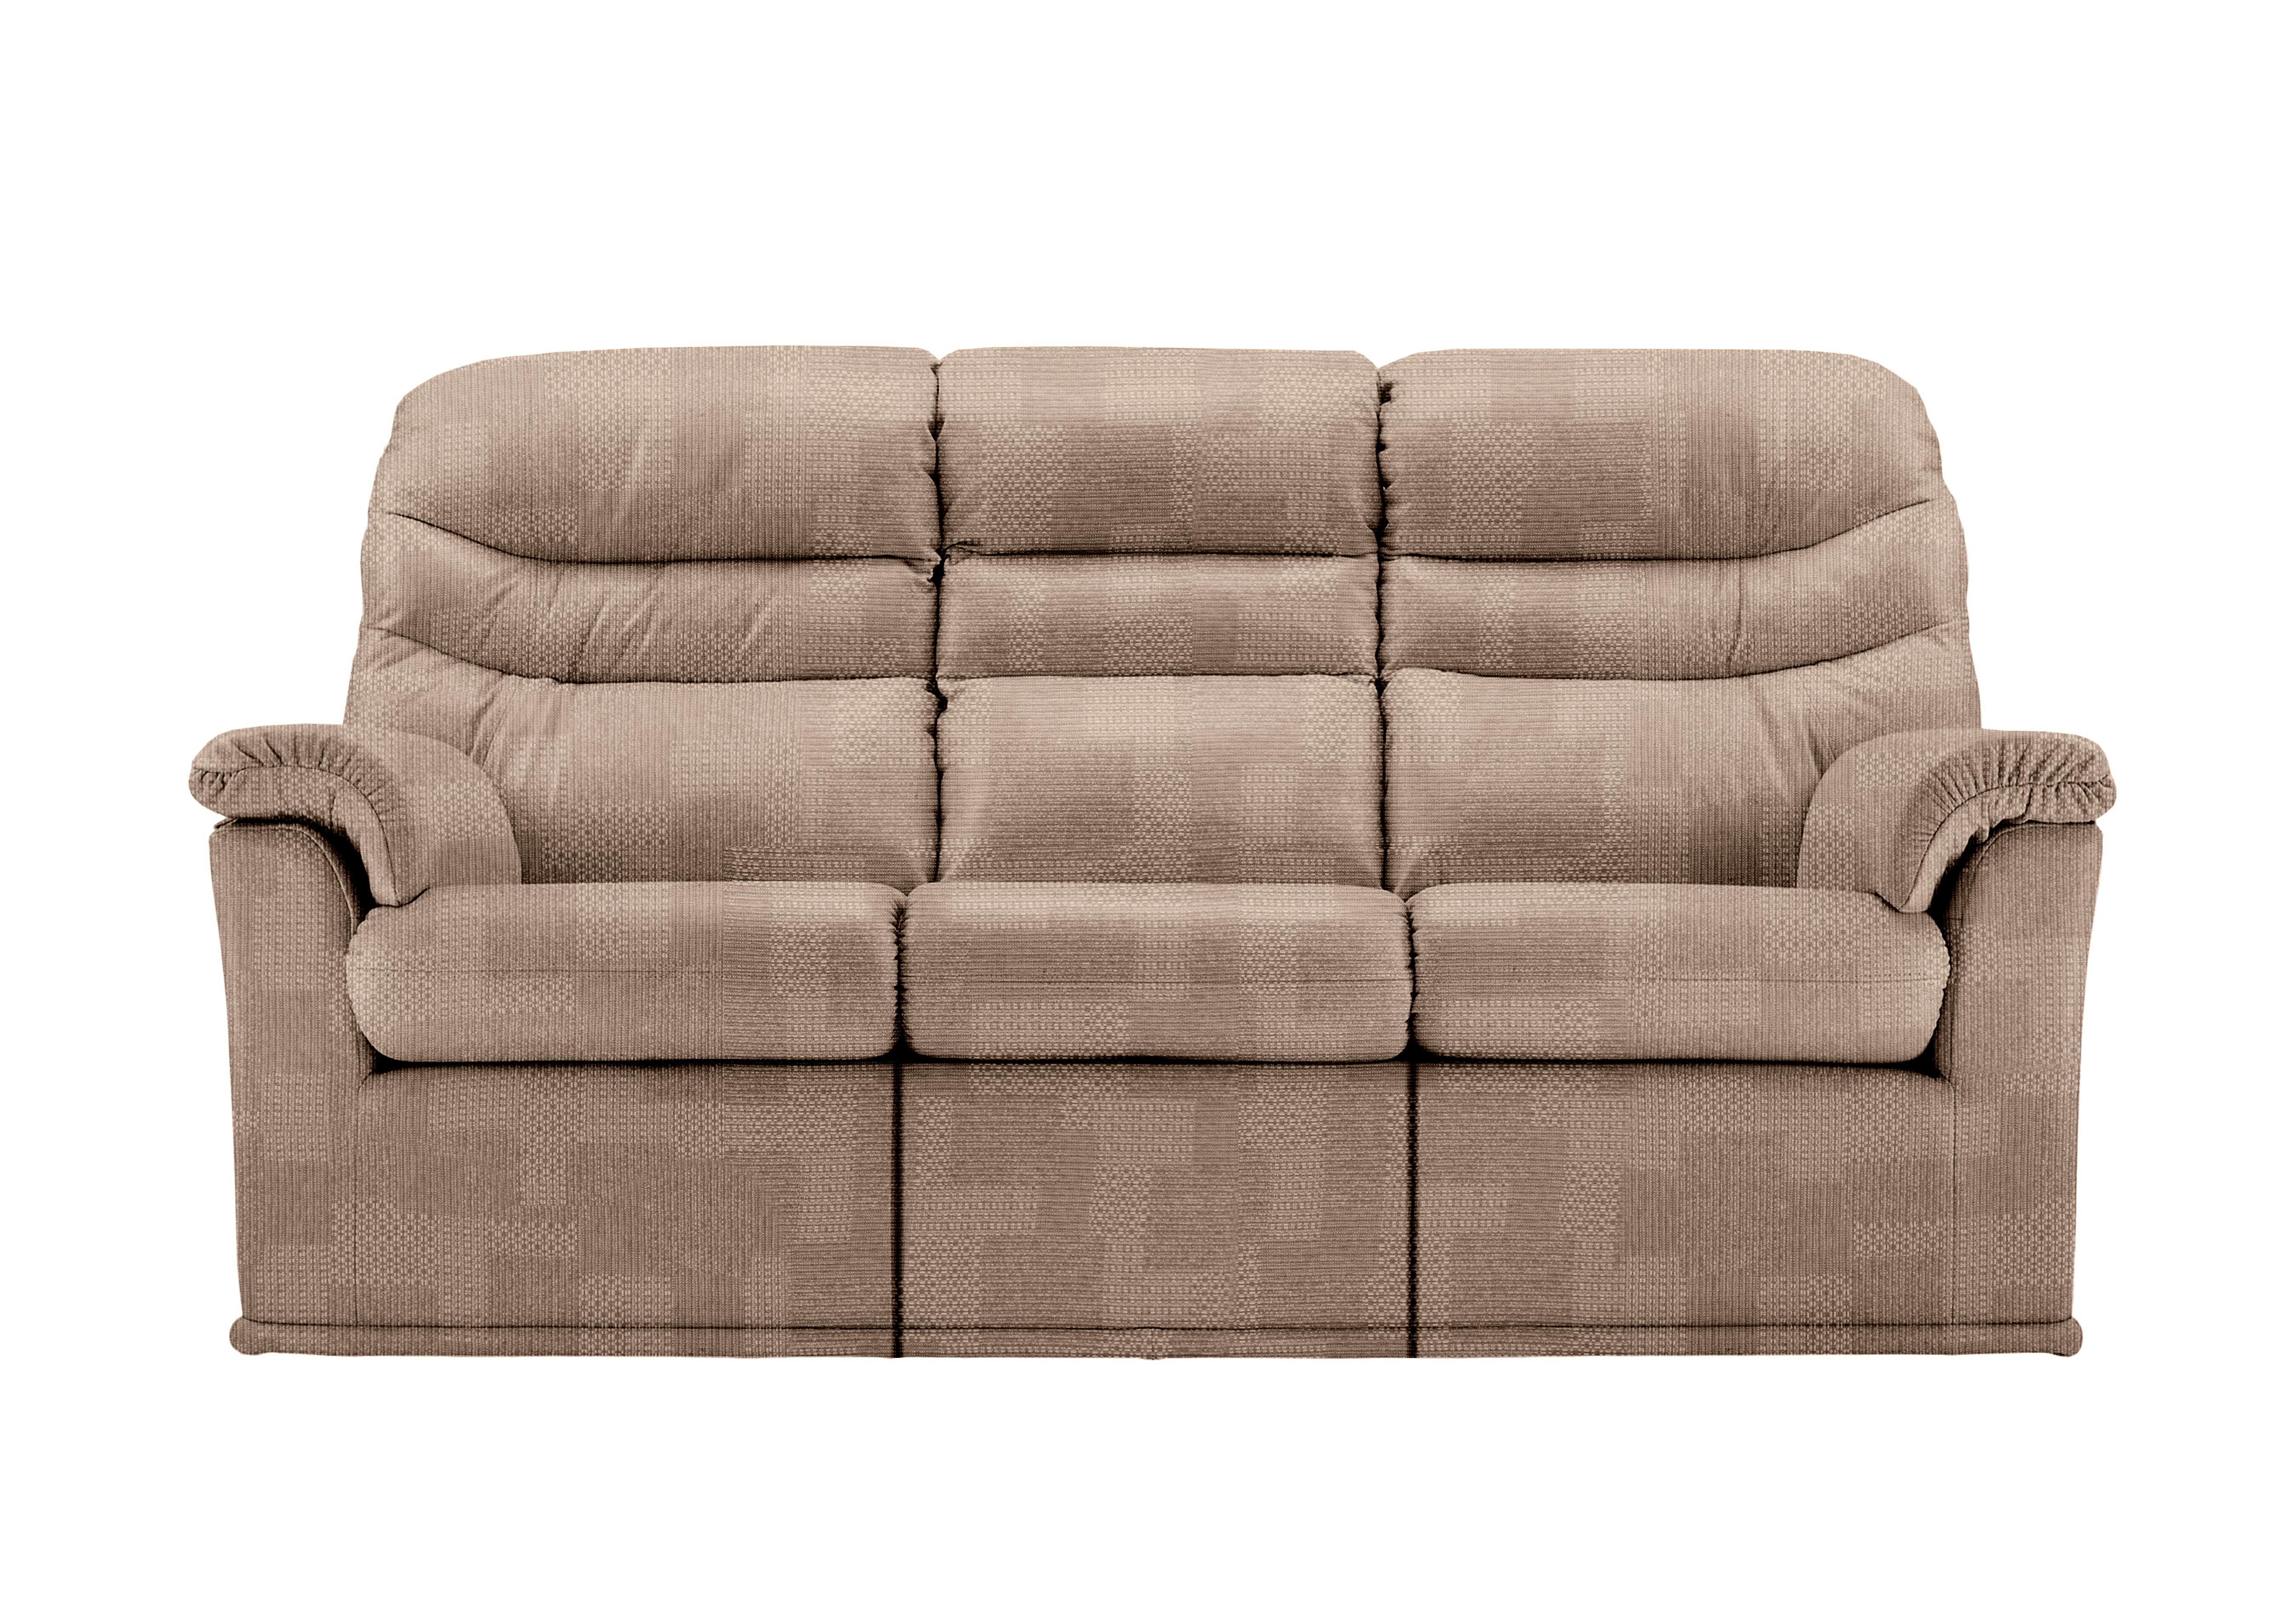 Malvern 3 Seater Fabric Sofa in A800 Faro Sand on Furniture Village